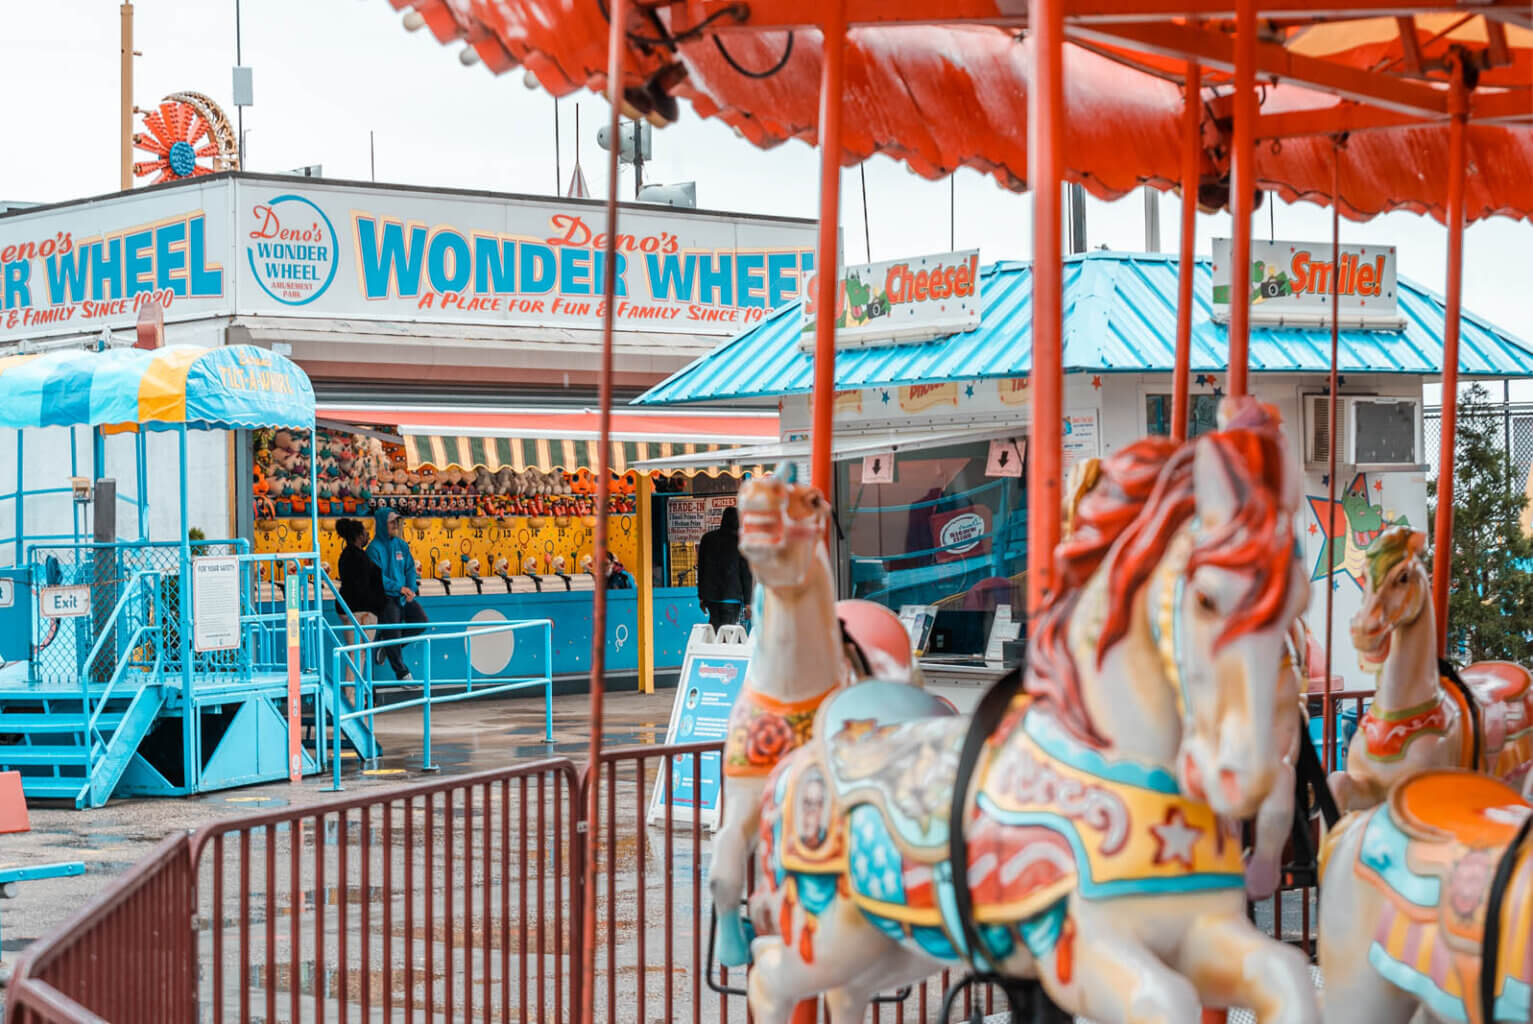 wonder wheel carousel at Denos Wonder Wheel Park at Coney Island